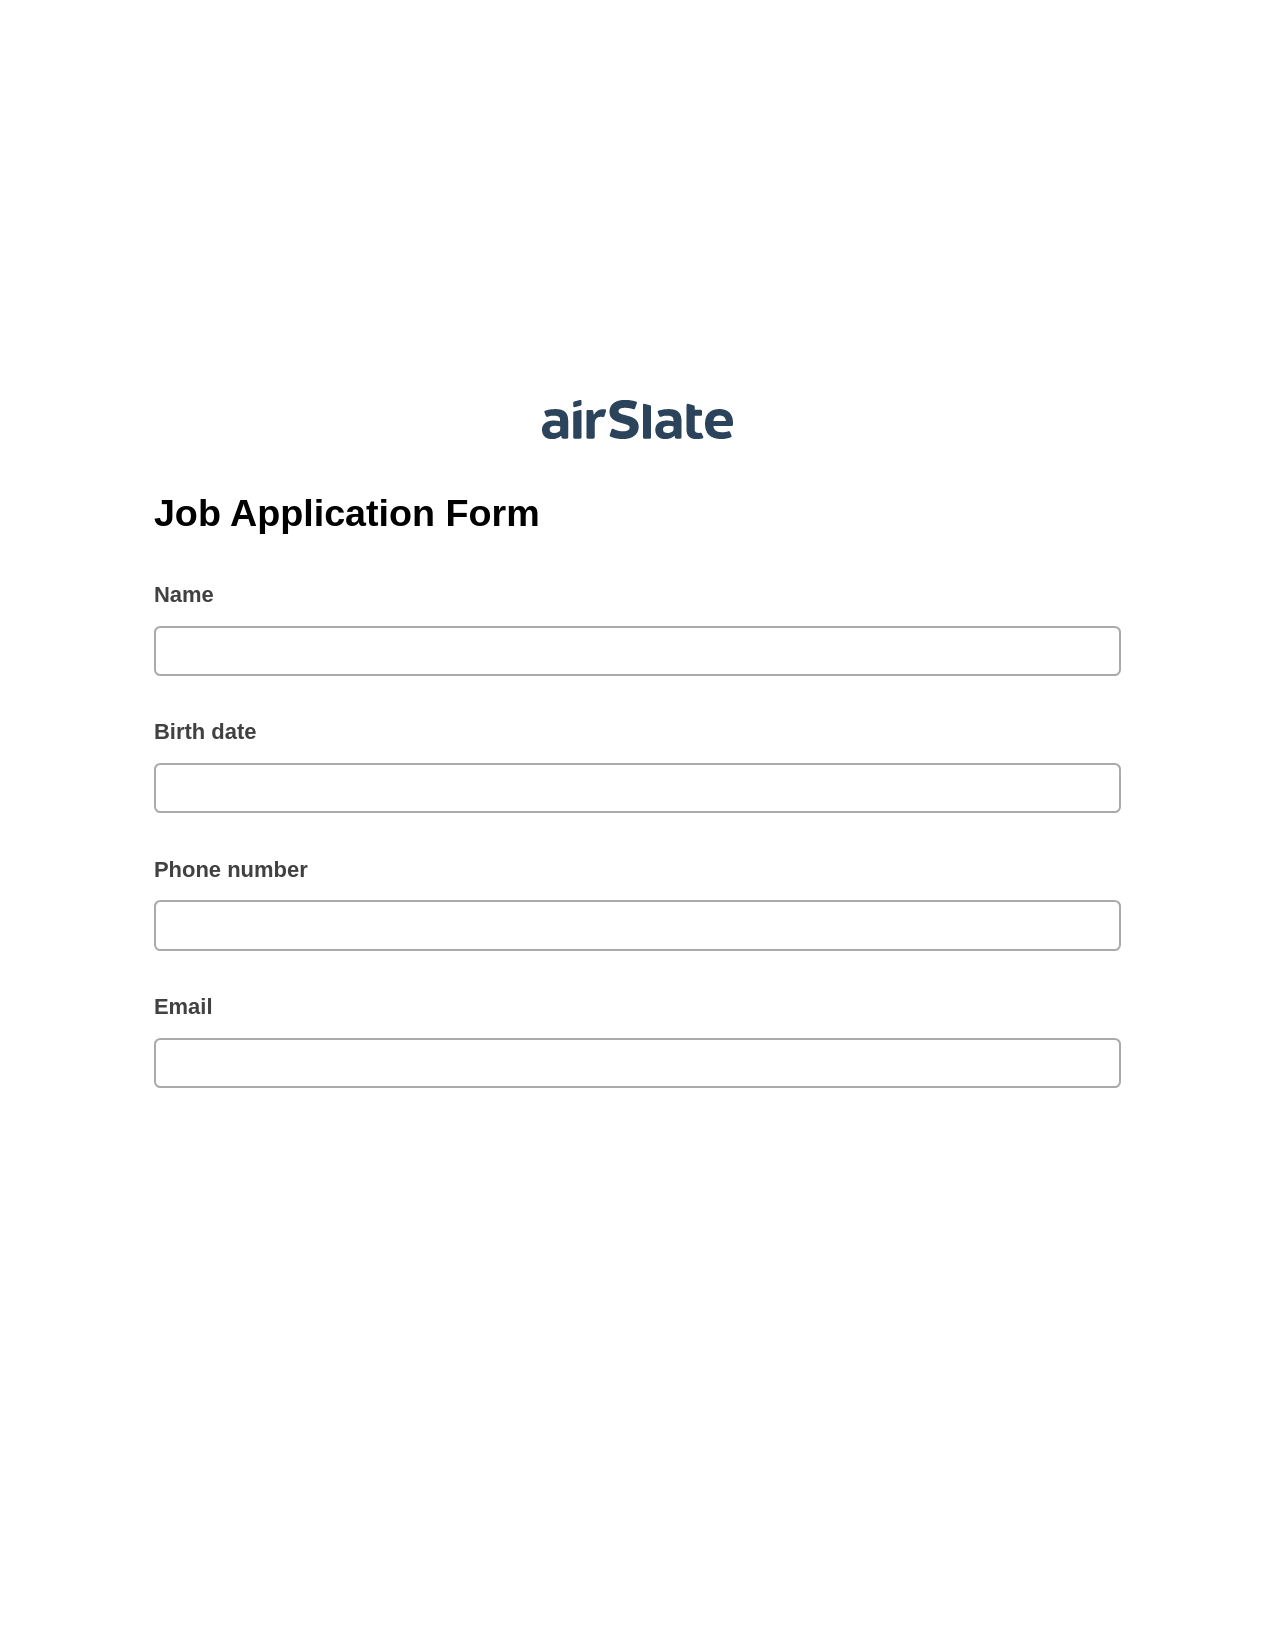 Multirole Job Application Form Pre-fill from Google Sheets Bot, Mailchimp send Campaign bot, OneDrive Bot